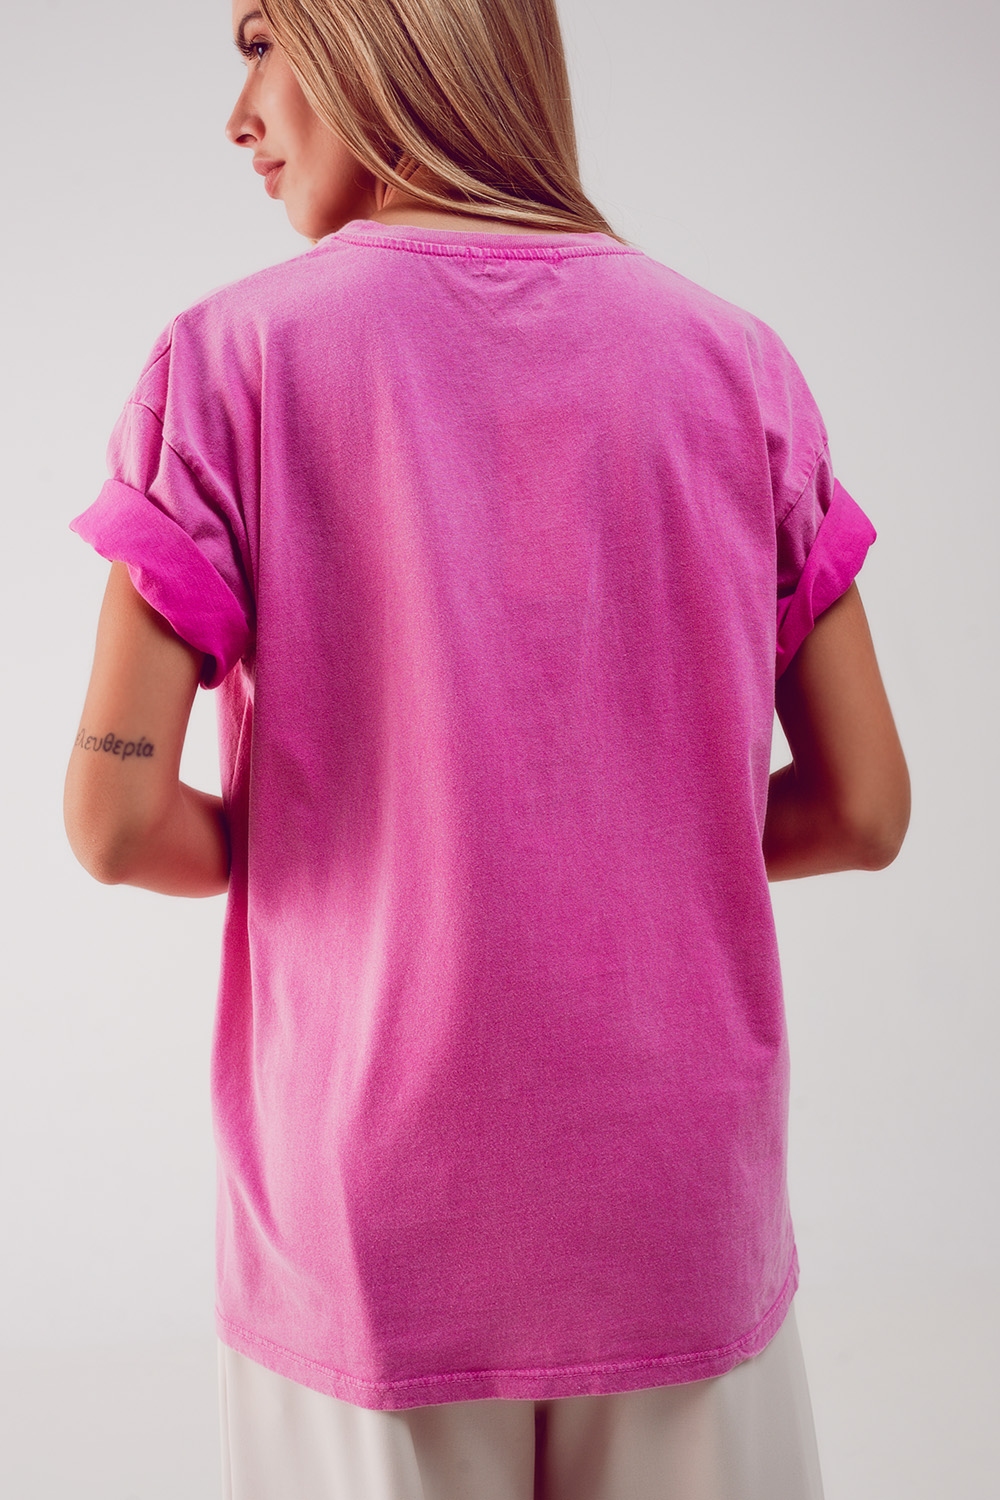 T-Shirt in Rosa mit Frontprint